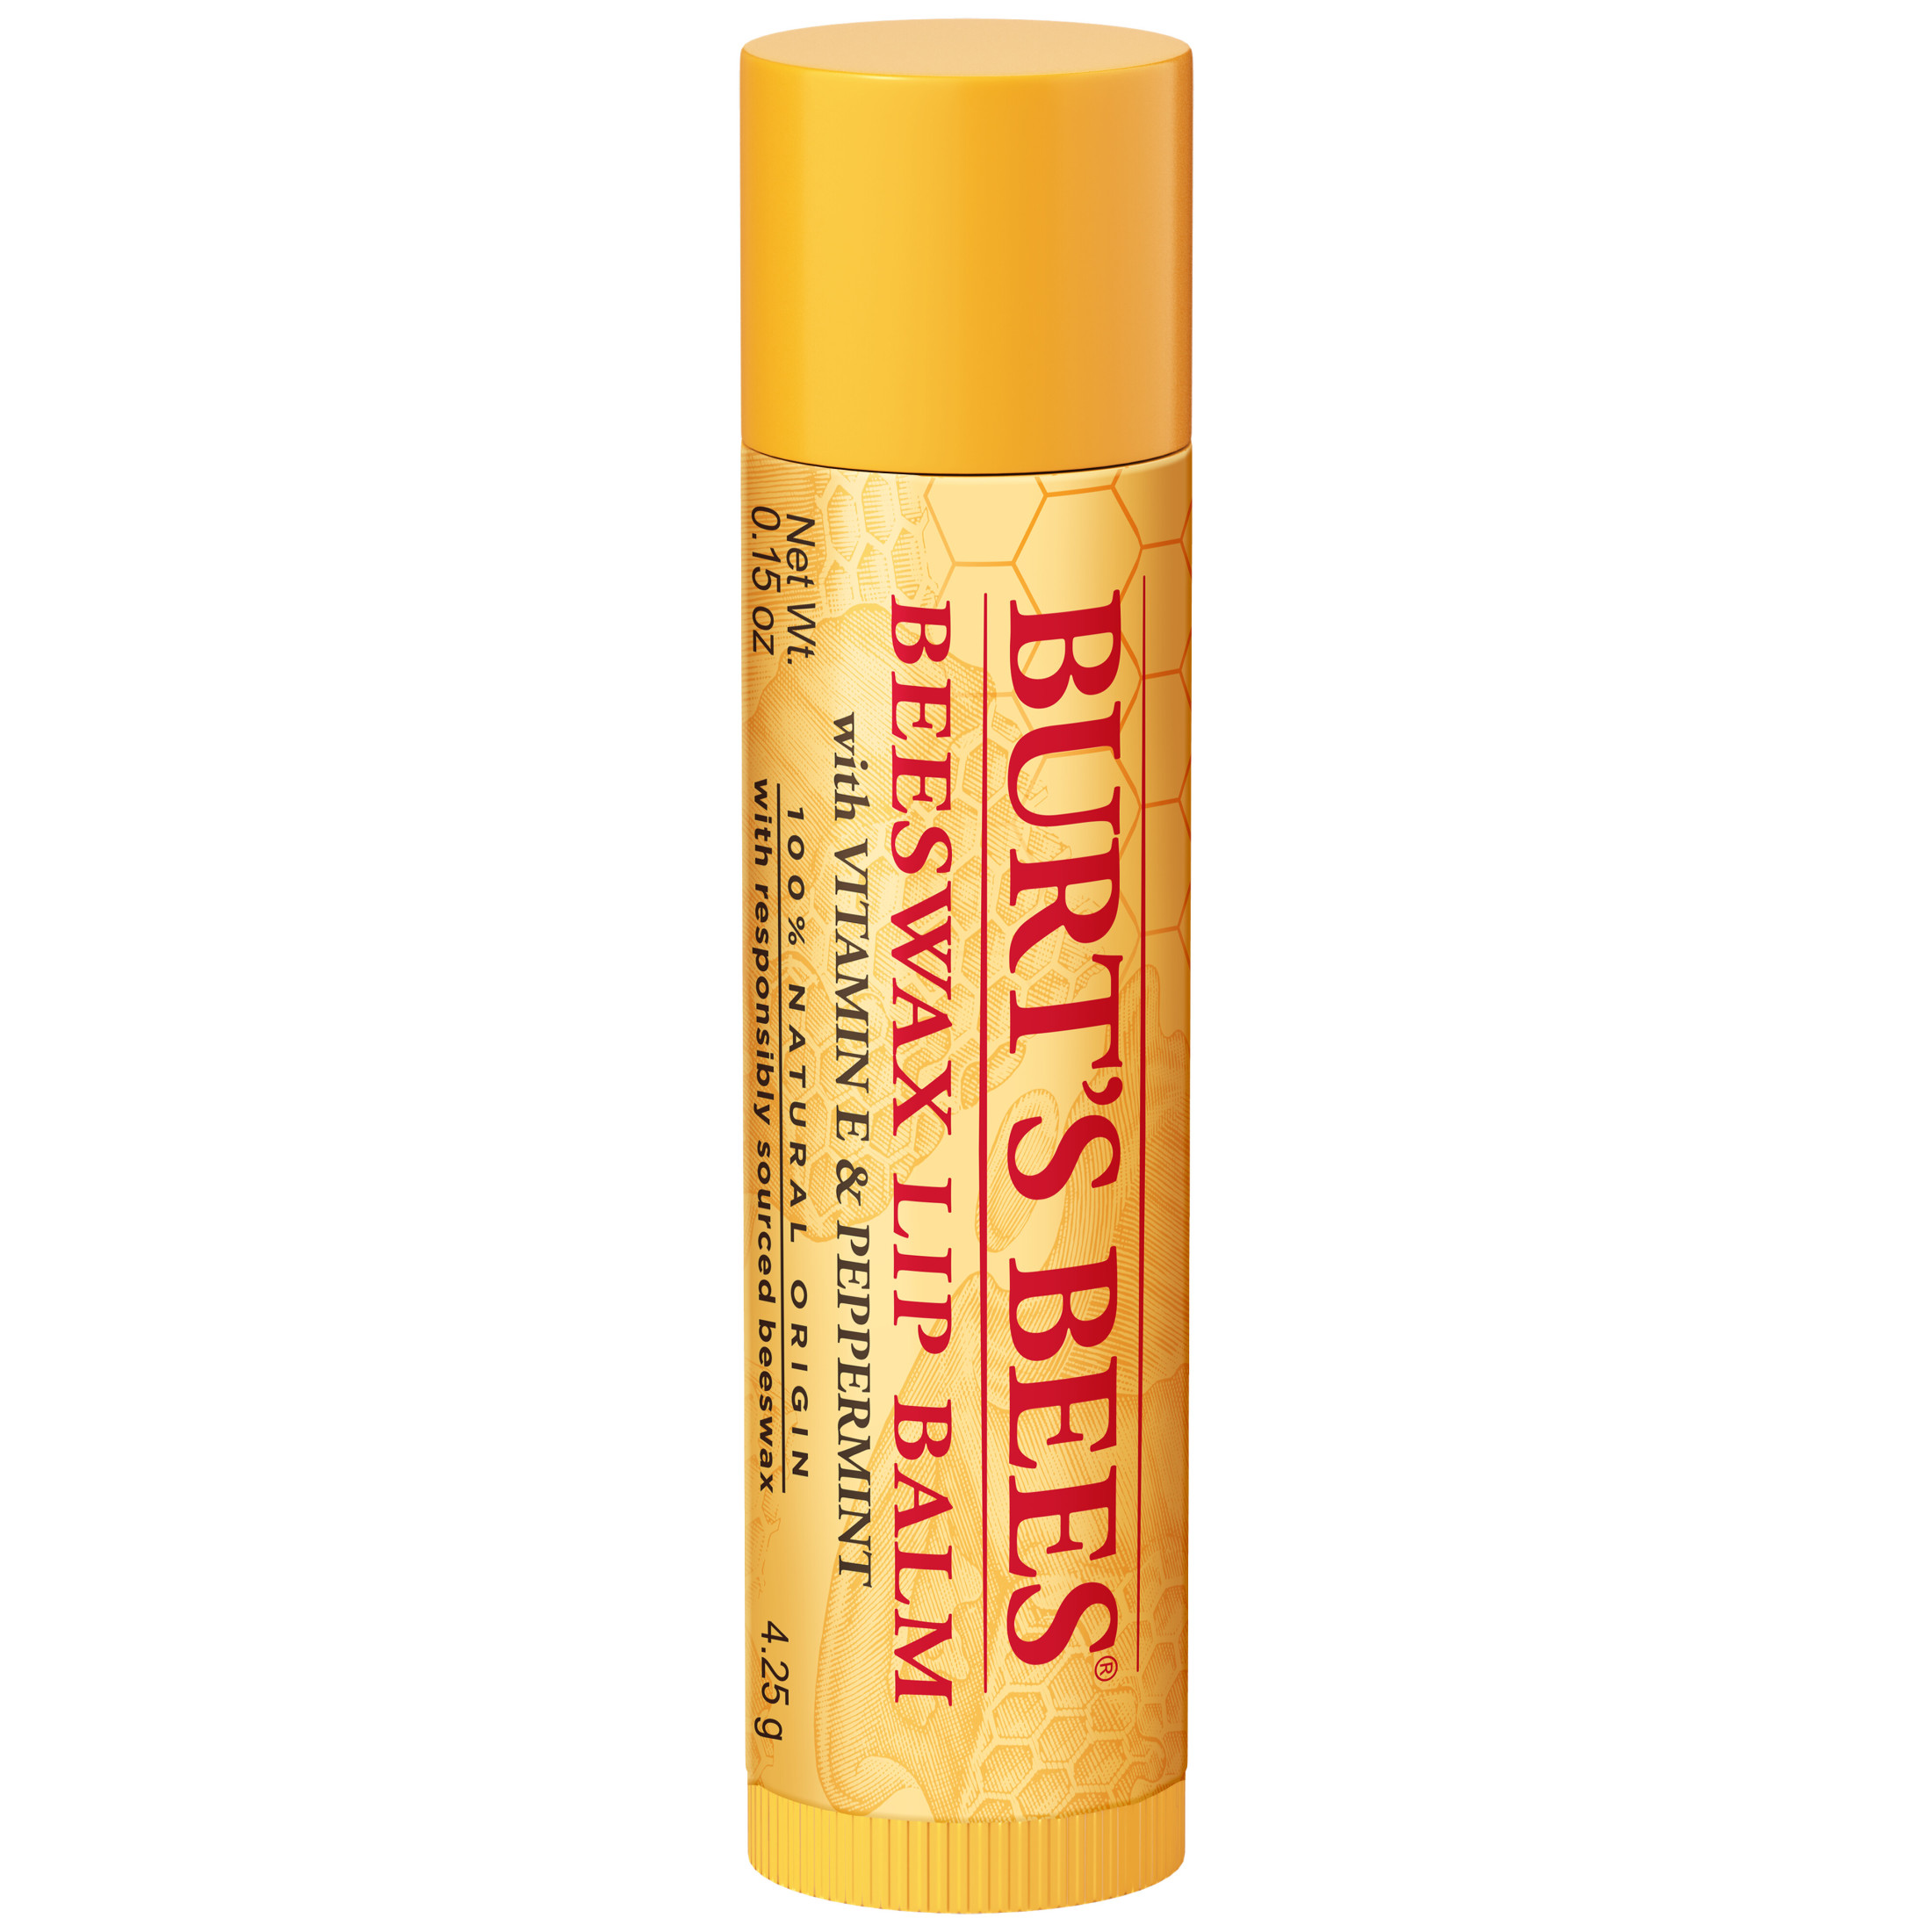 Burts Bees 100% Natural Origin Moisturizing Lip Balm, Original Beeswax, 0.15 Ounce Tube - image 1 of 15